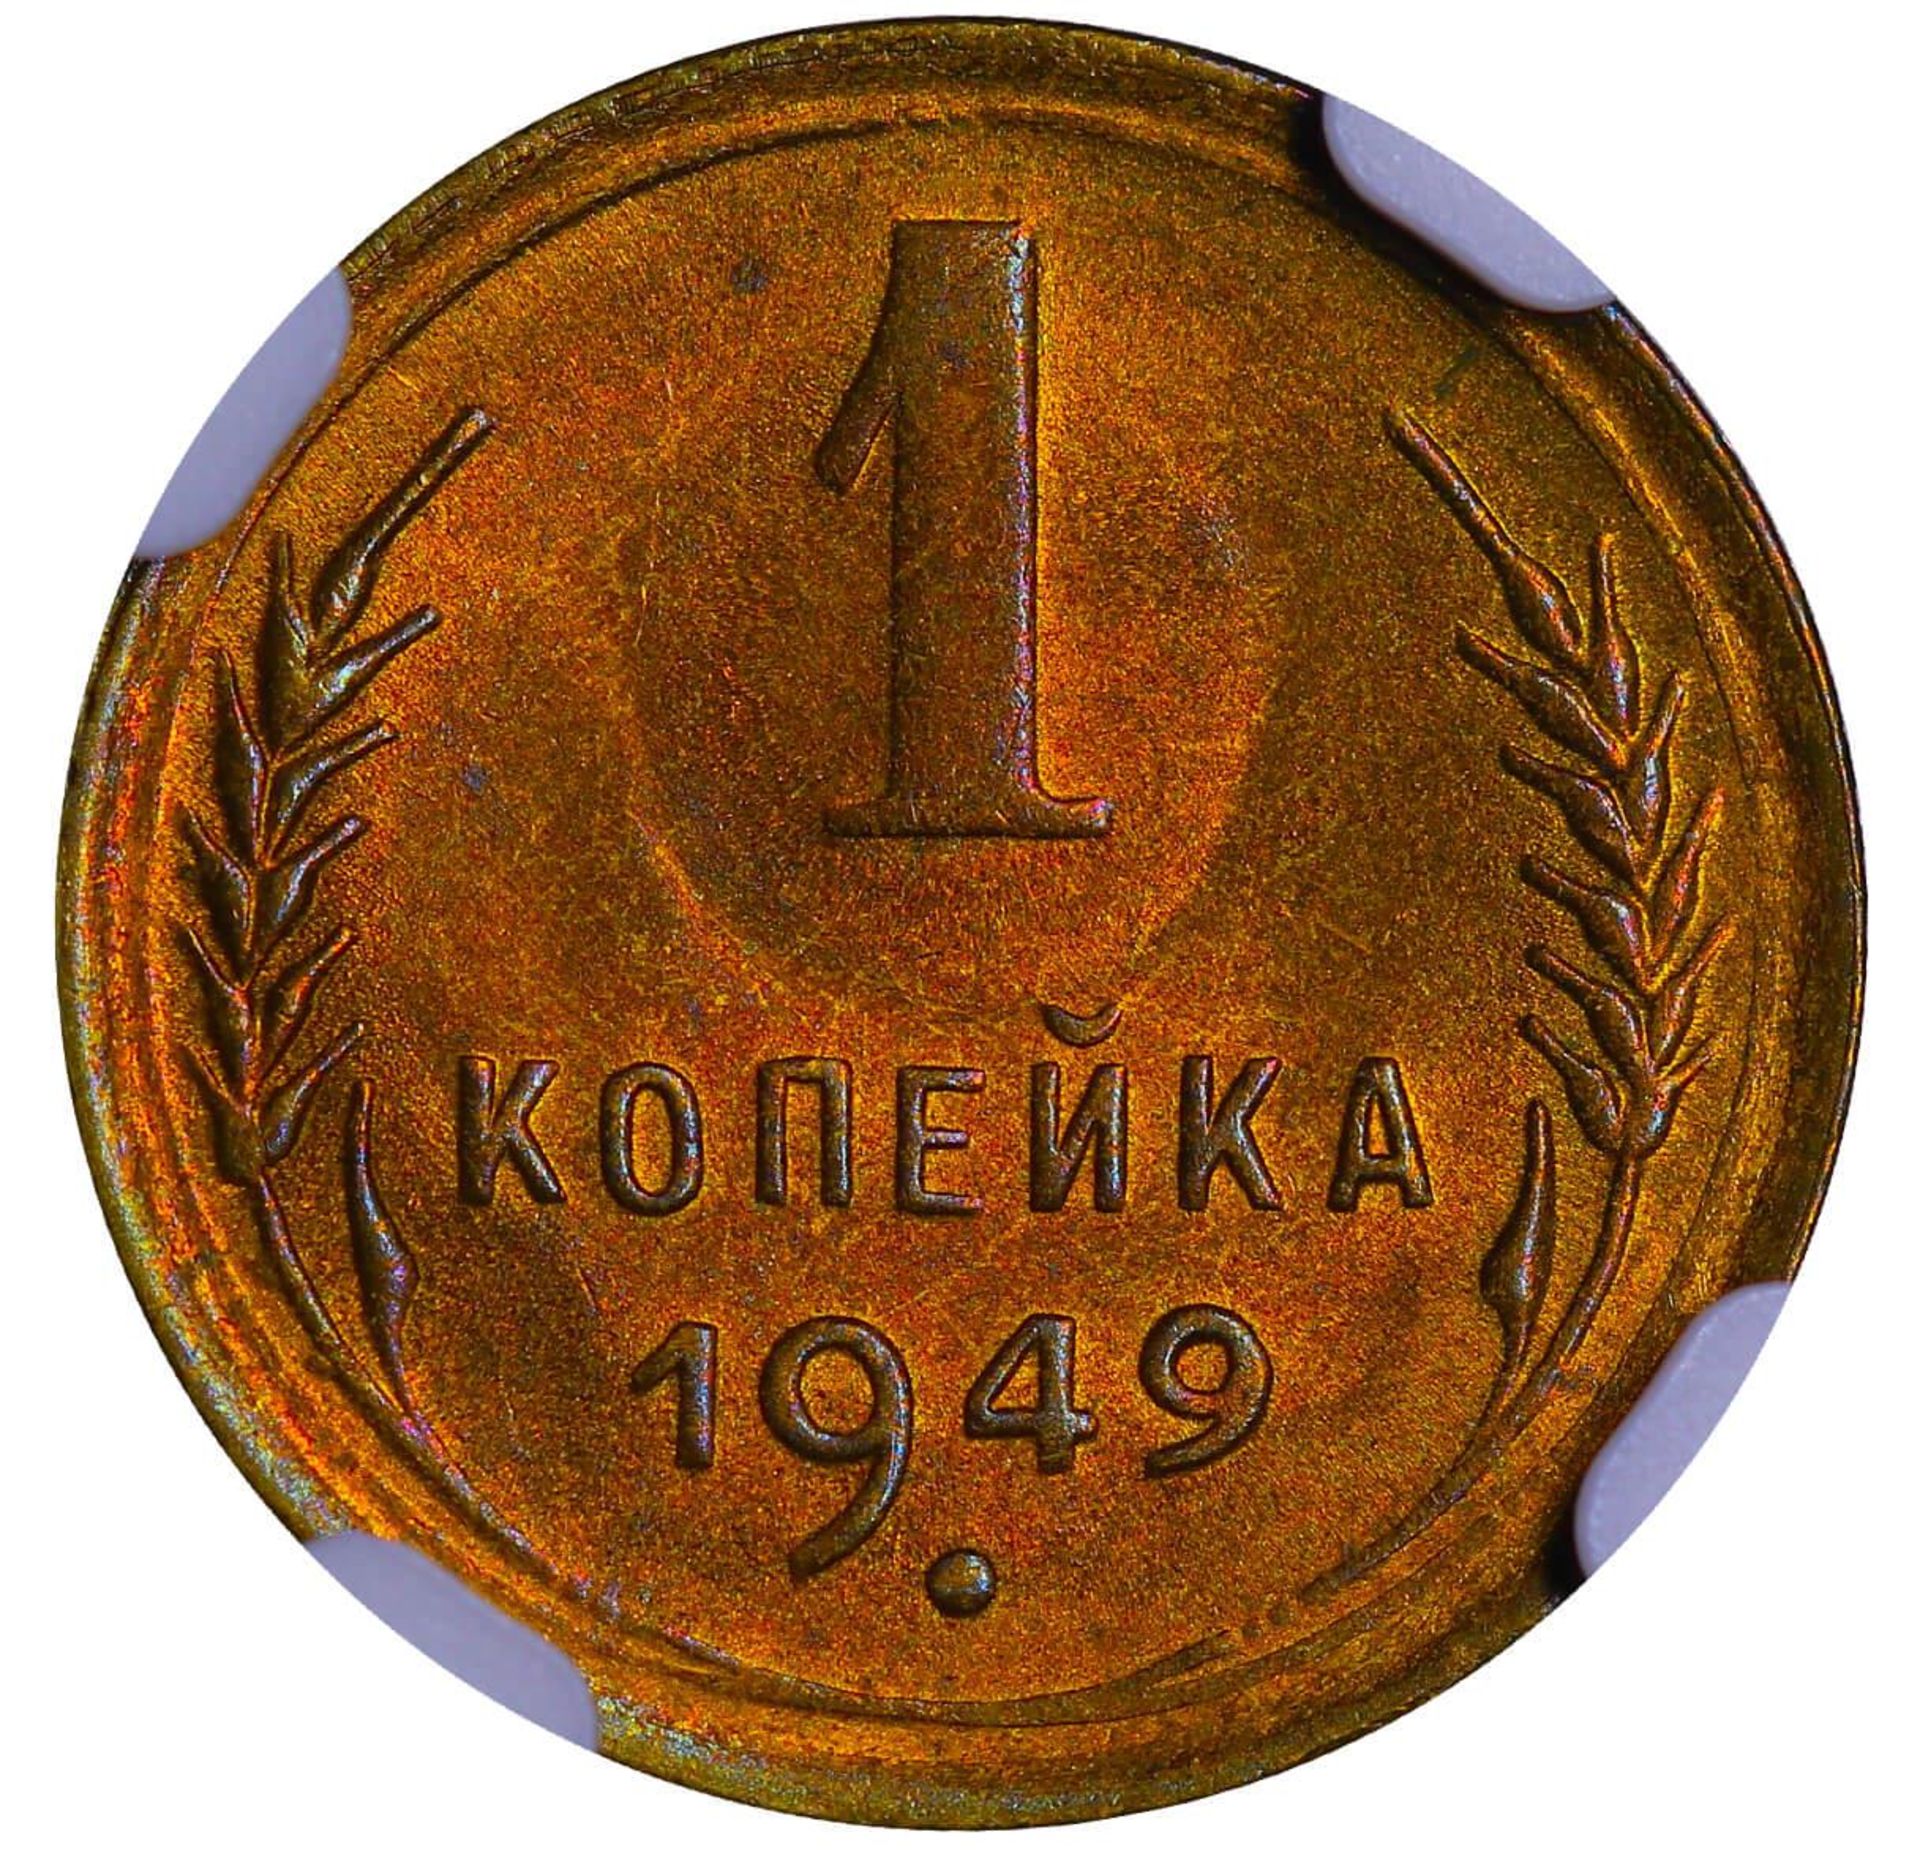 Soviet Union, 1 Kopeck, 1949 year, NGC, MS 65 - Image 2 of 3